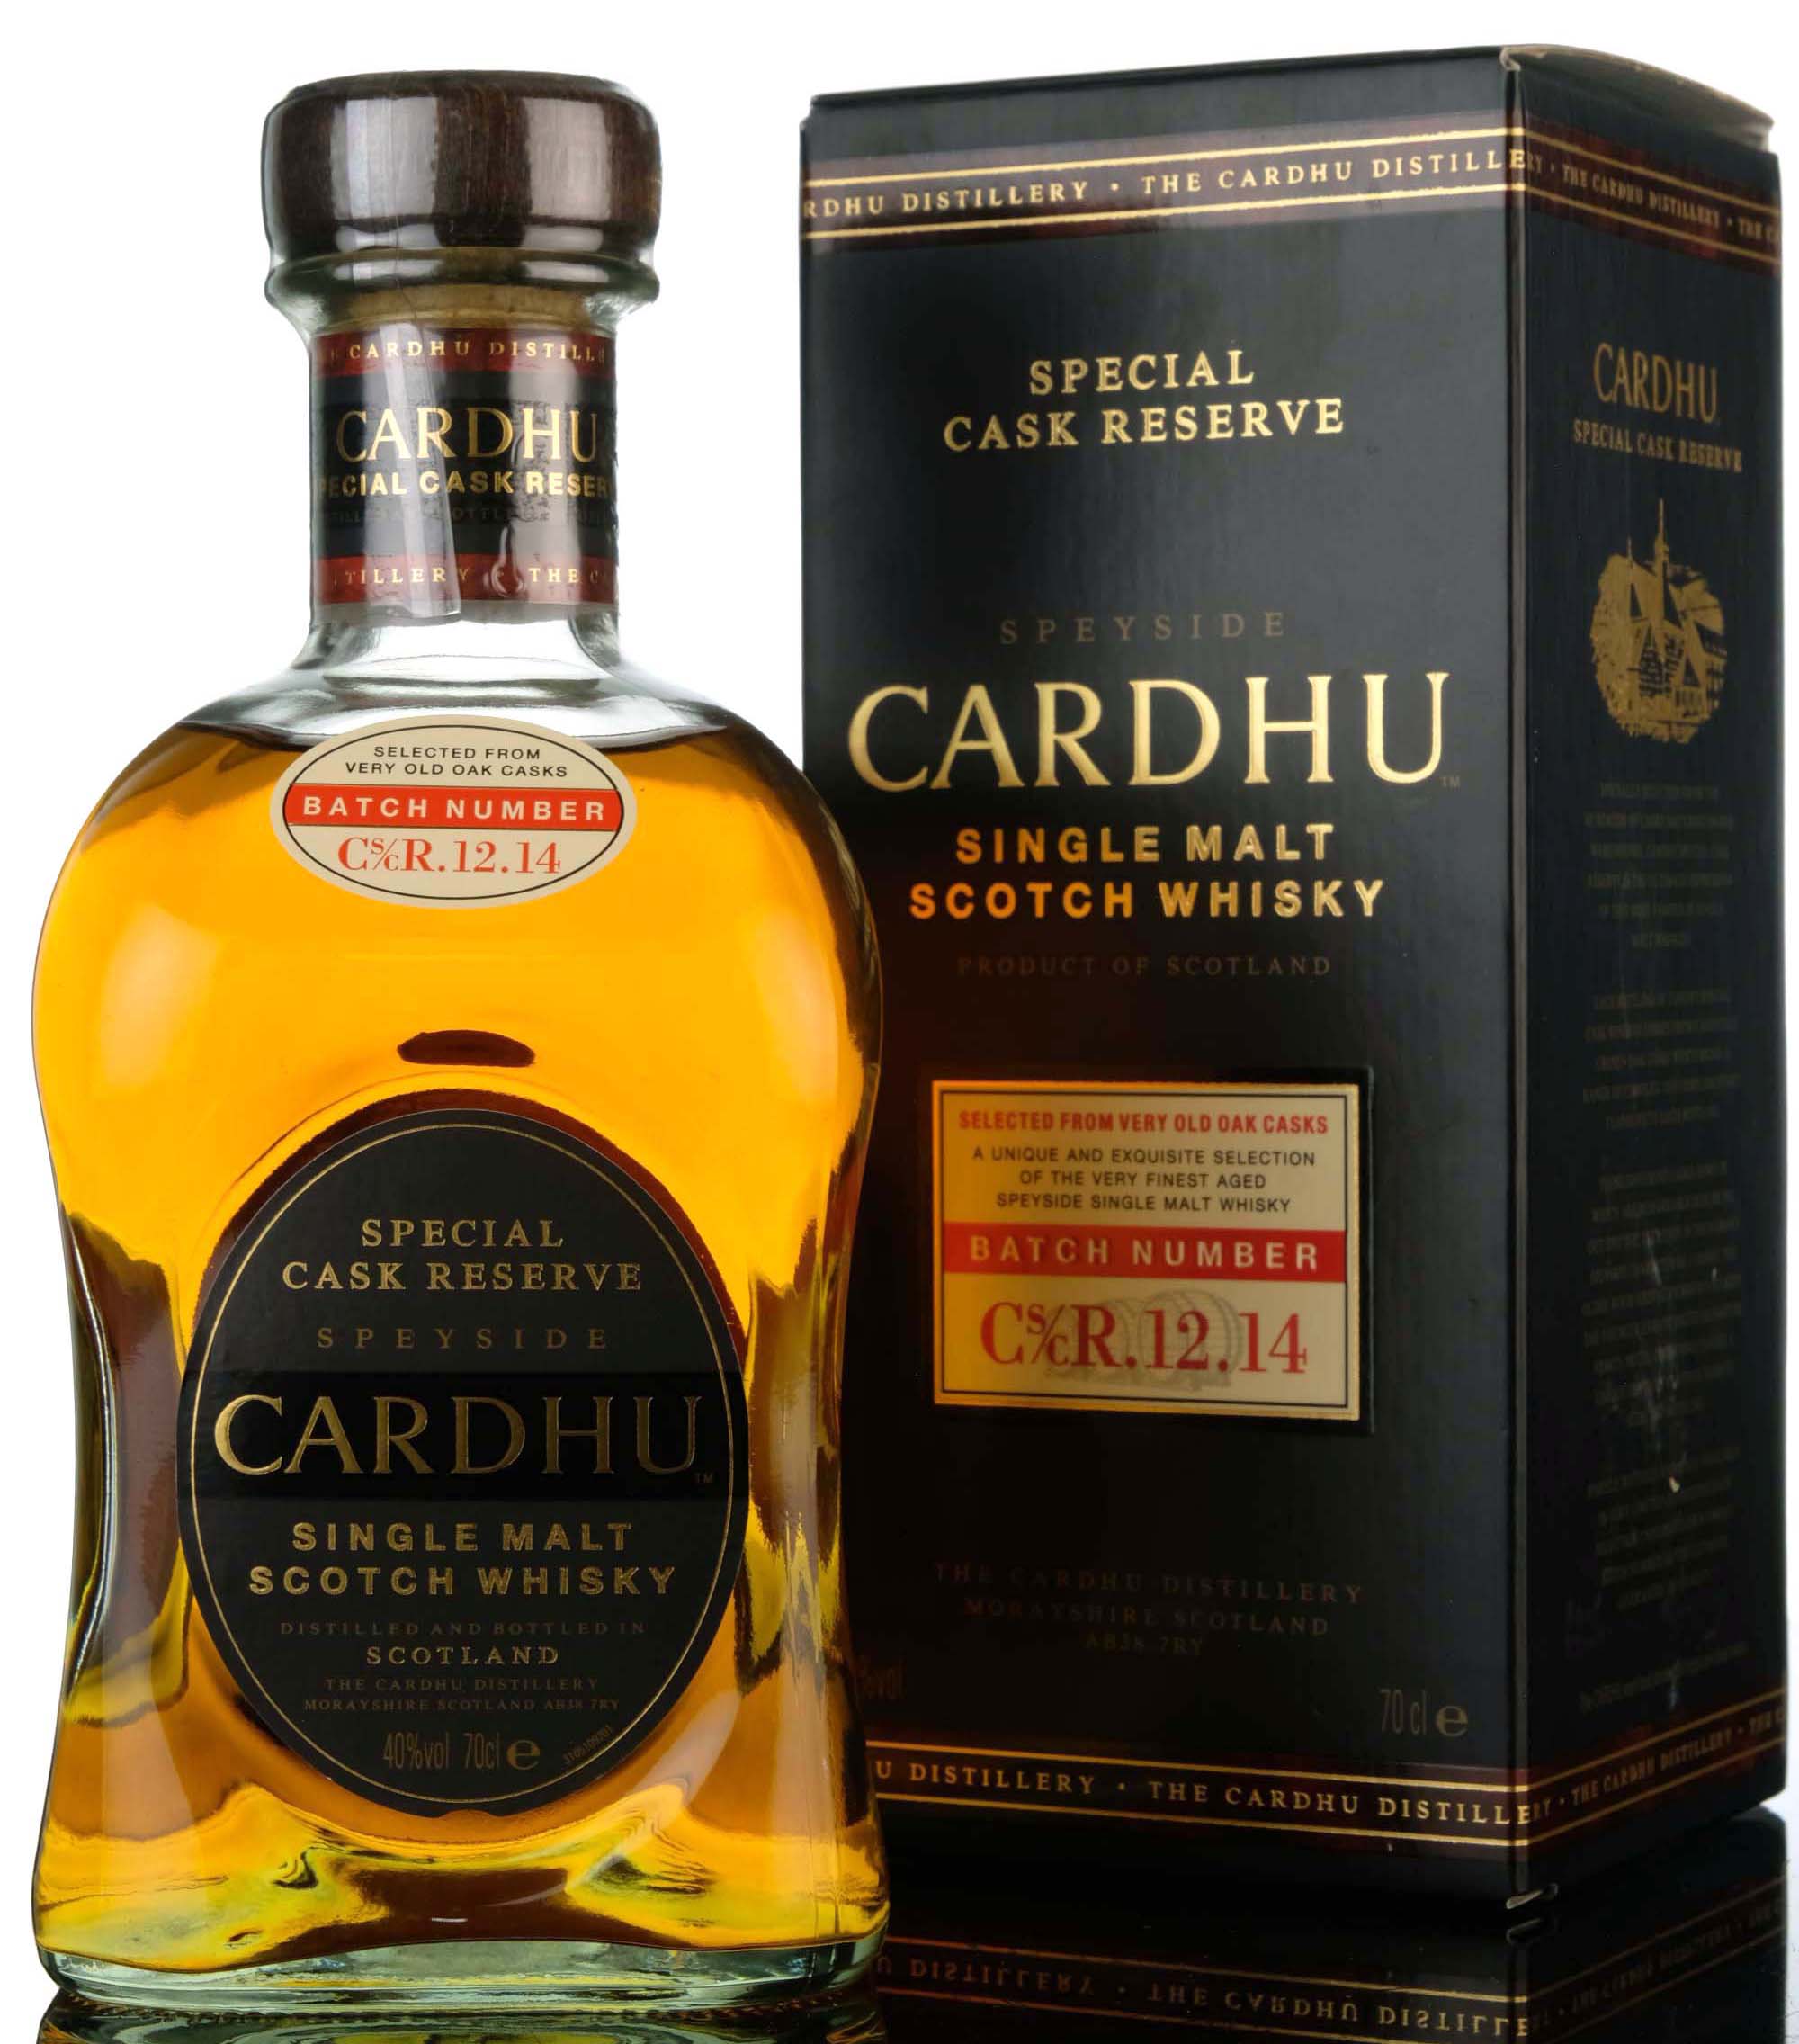 Cardhu Special Cask Reserve - Batch Cs/cR.12.14 - 2012 Release